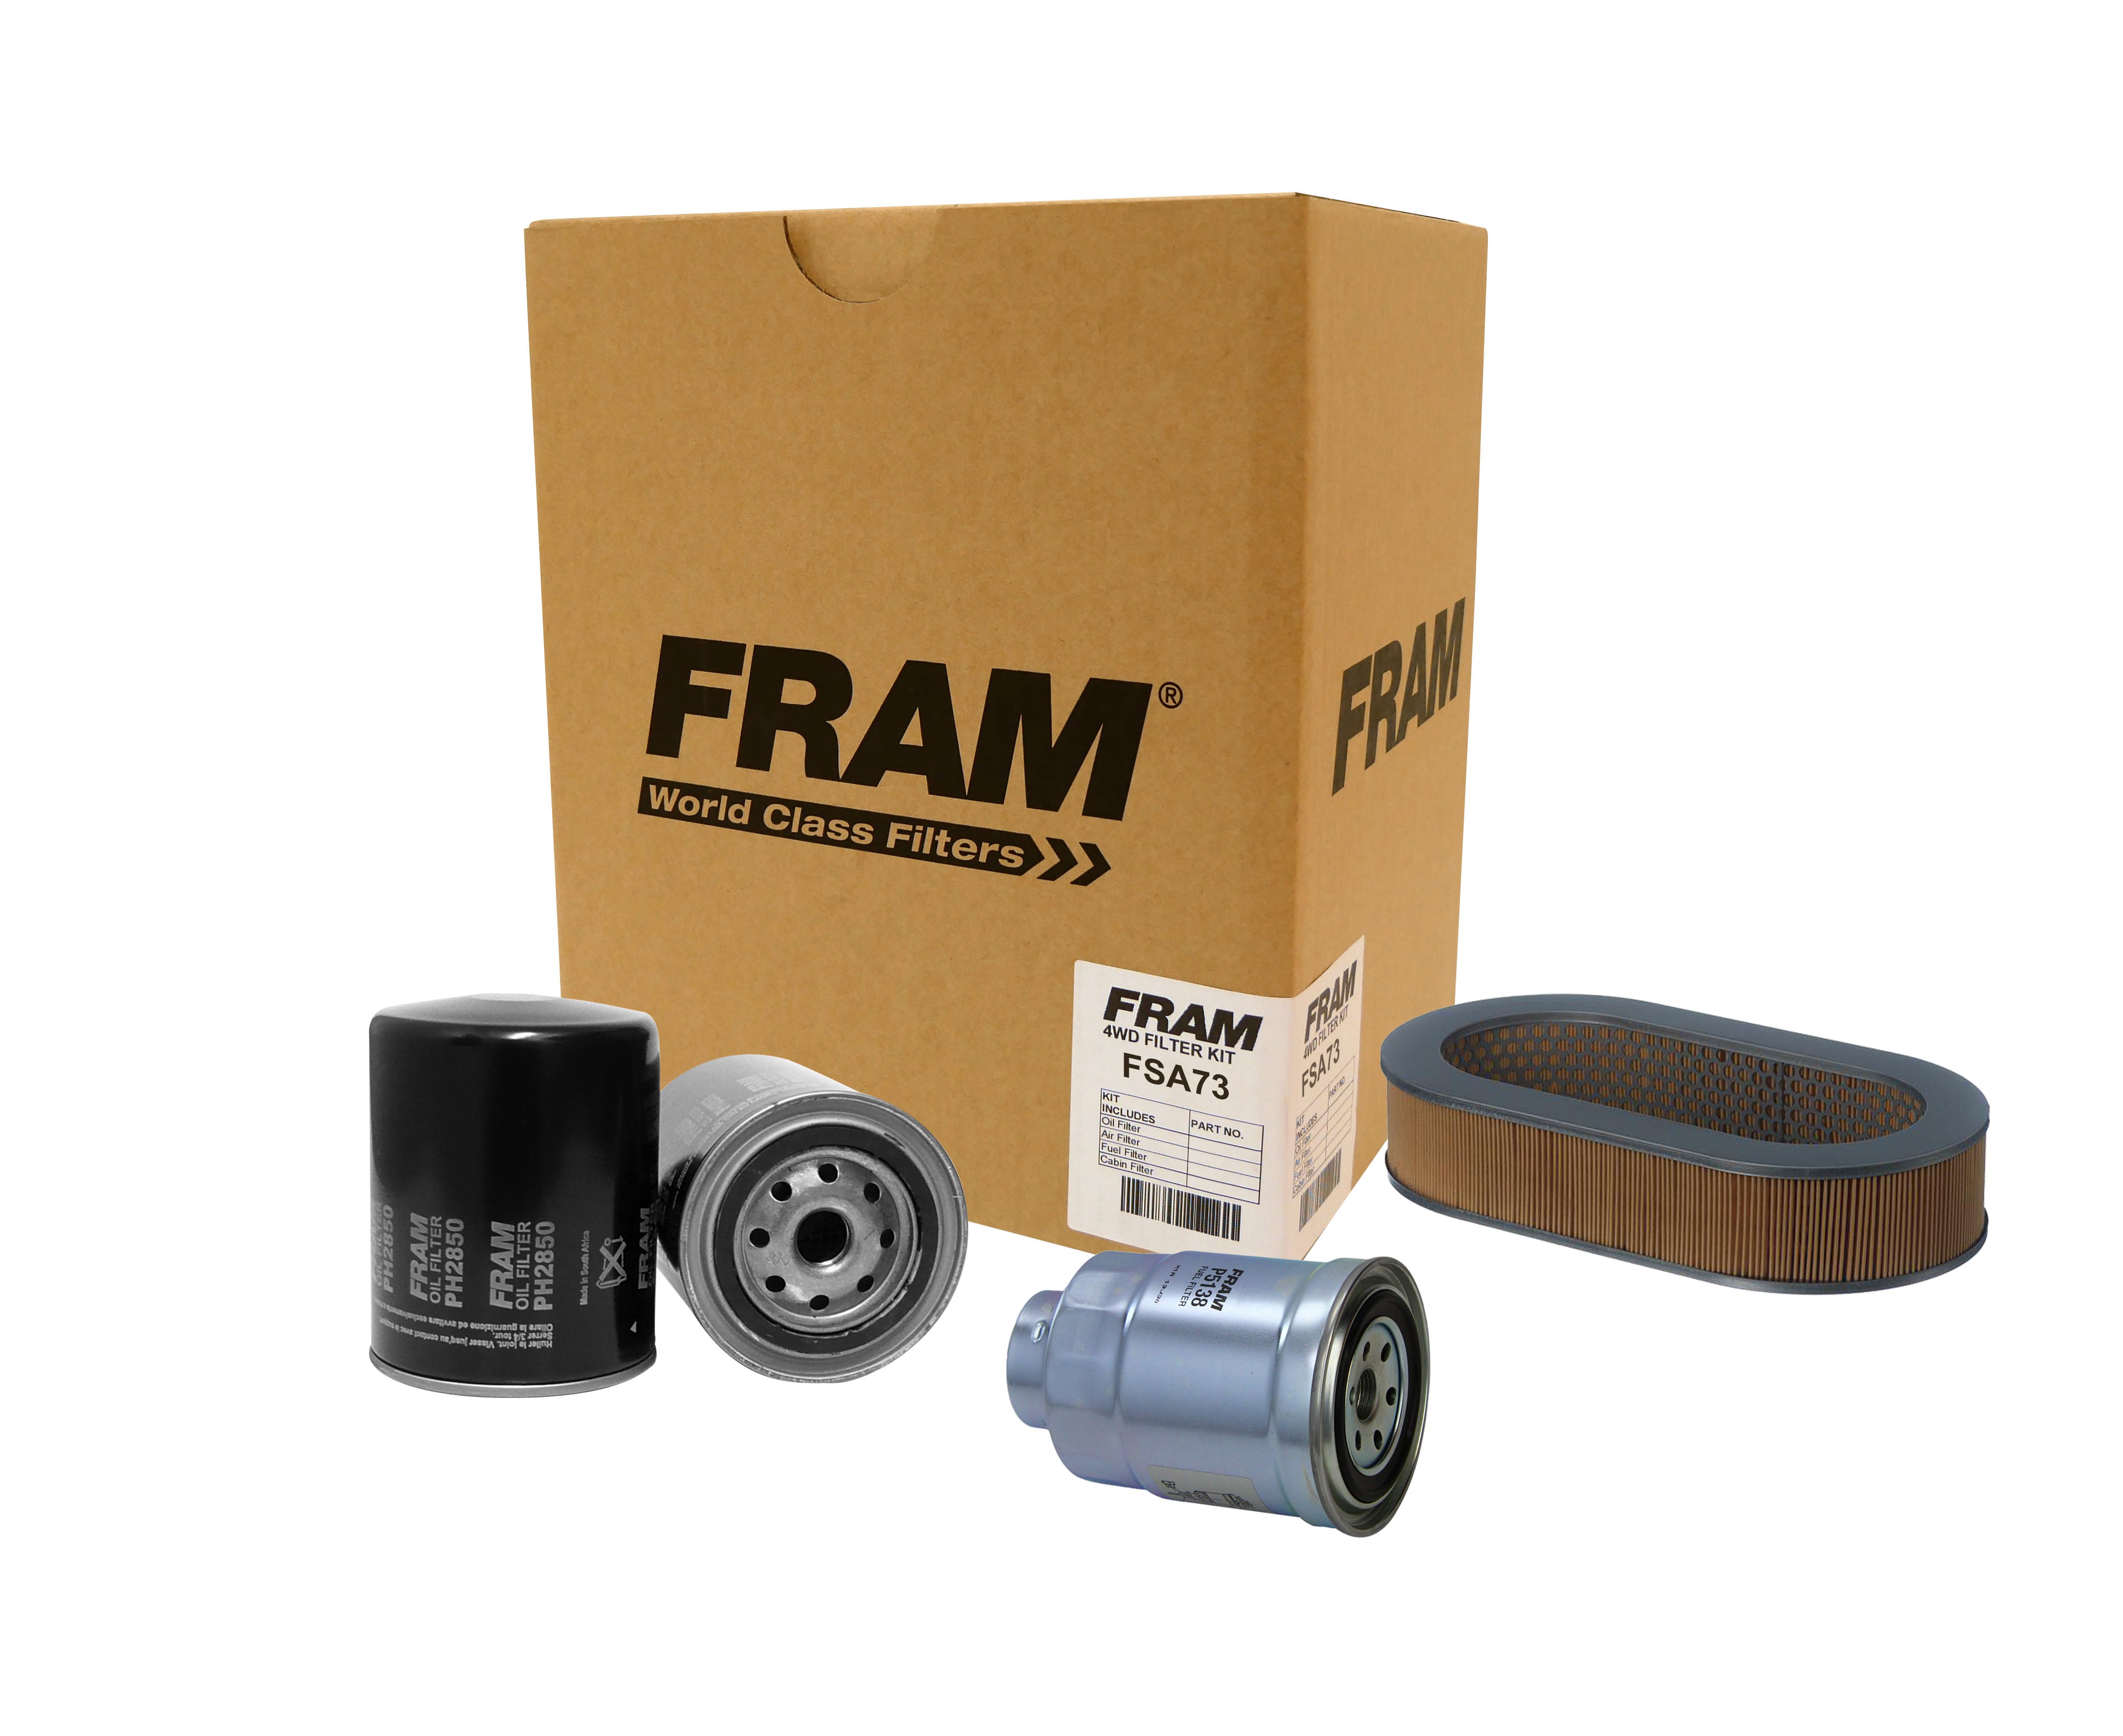 FRAM 4wd Filter Kit for Nissan Patrol GQ & GU TD42 Y60 Y61 4.2L | FRAM